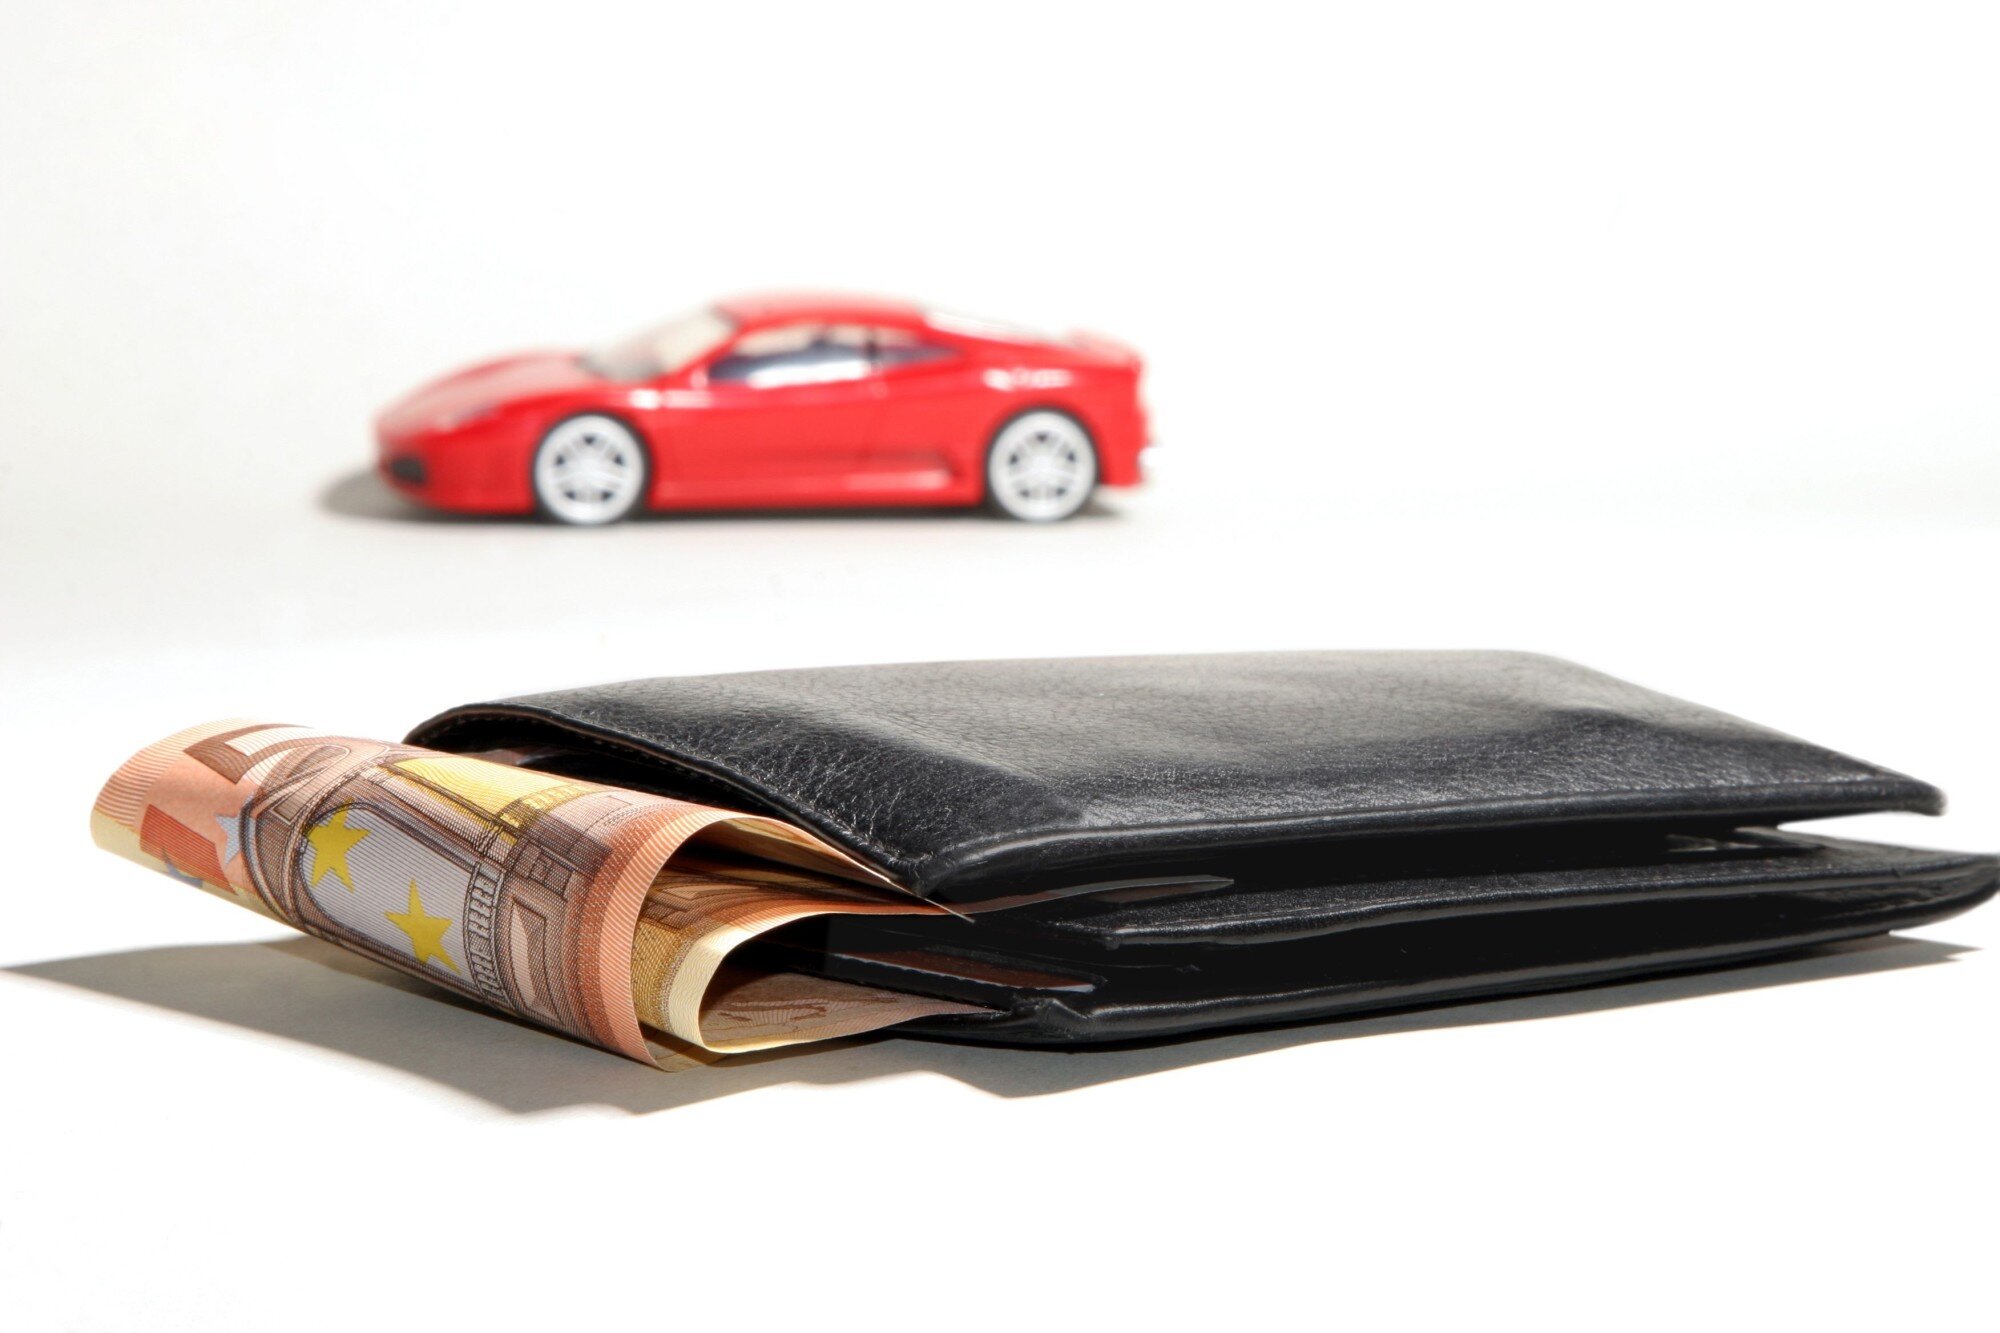 personal loan vs car loan